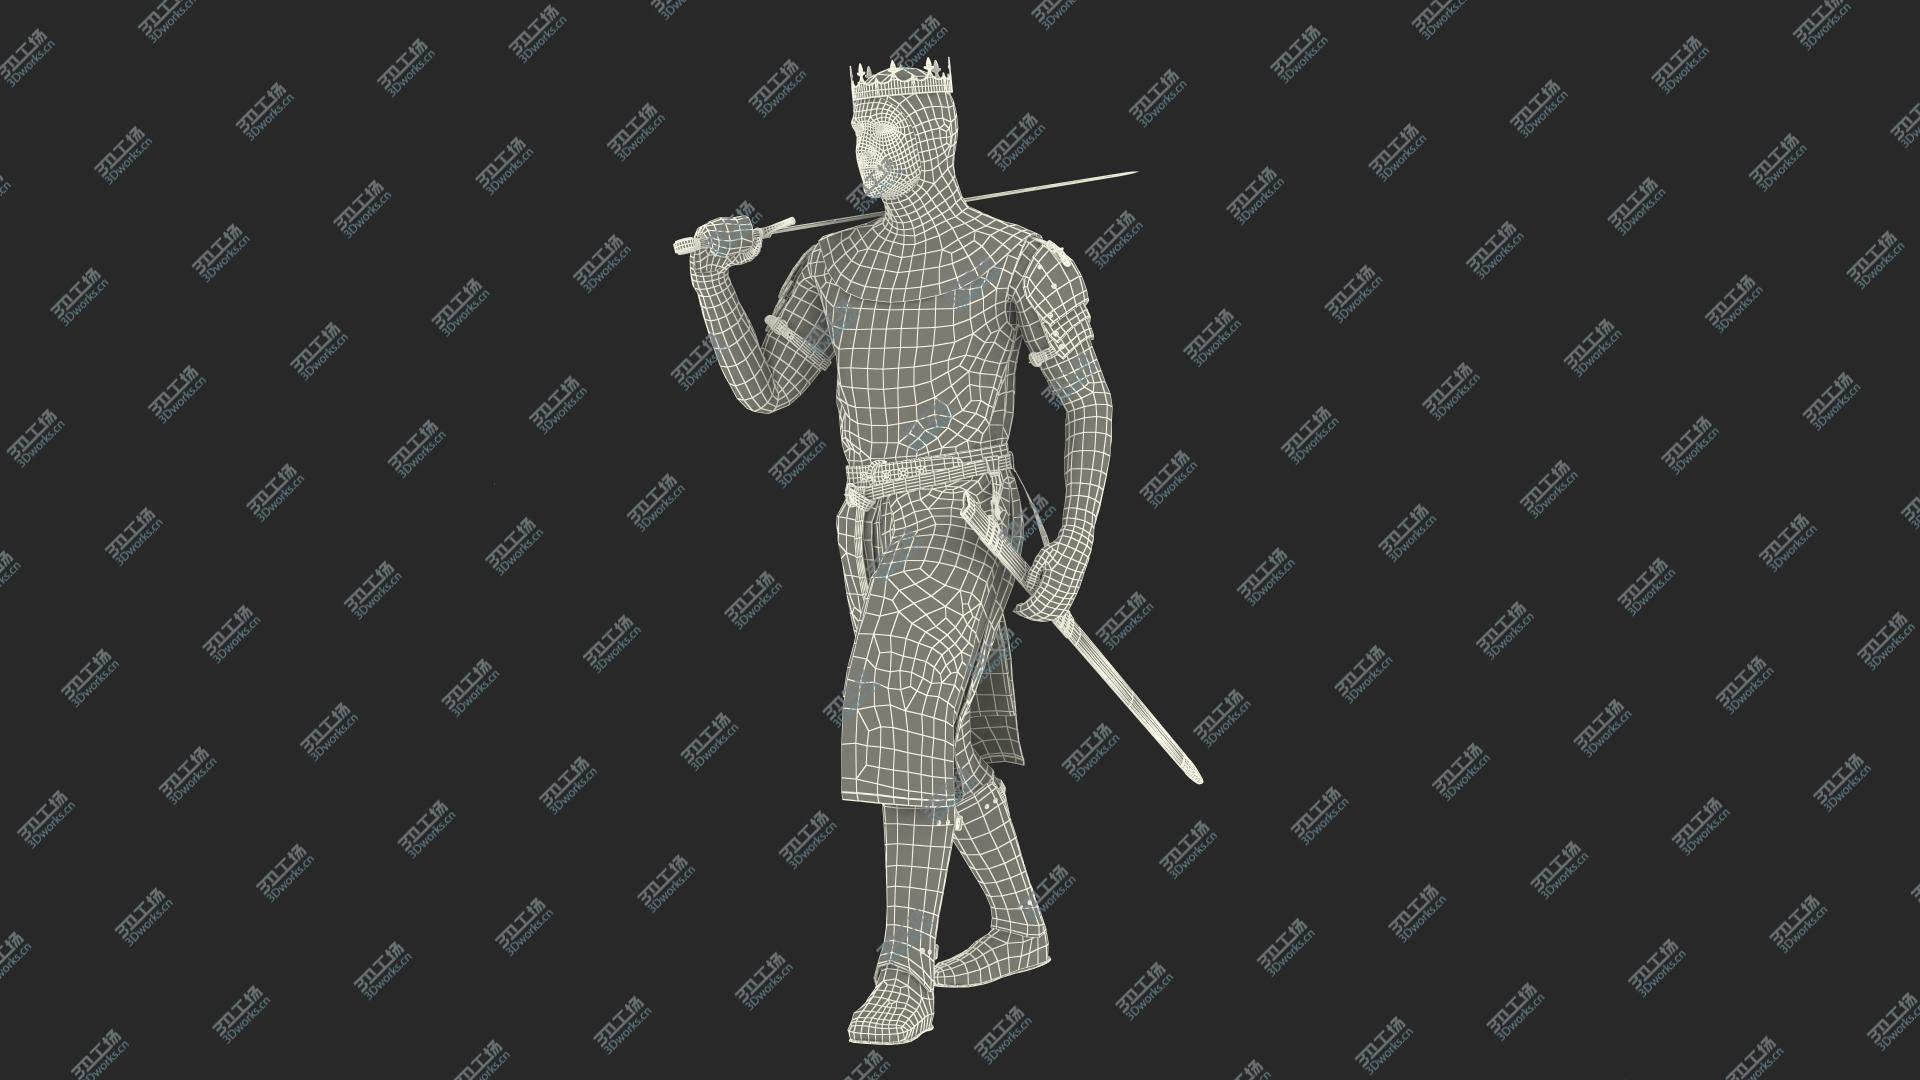 images/goods_img/202104093/3D Crusader Knight King Walking Pose model/3.jpg